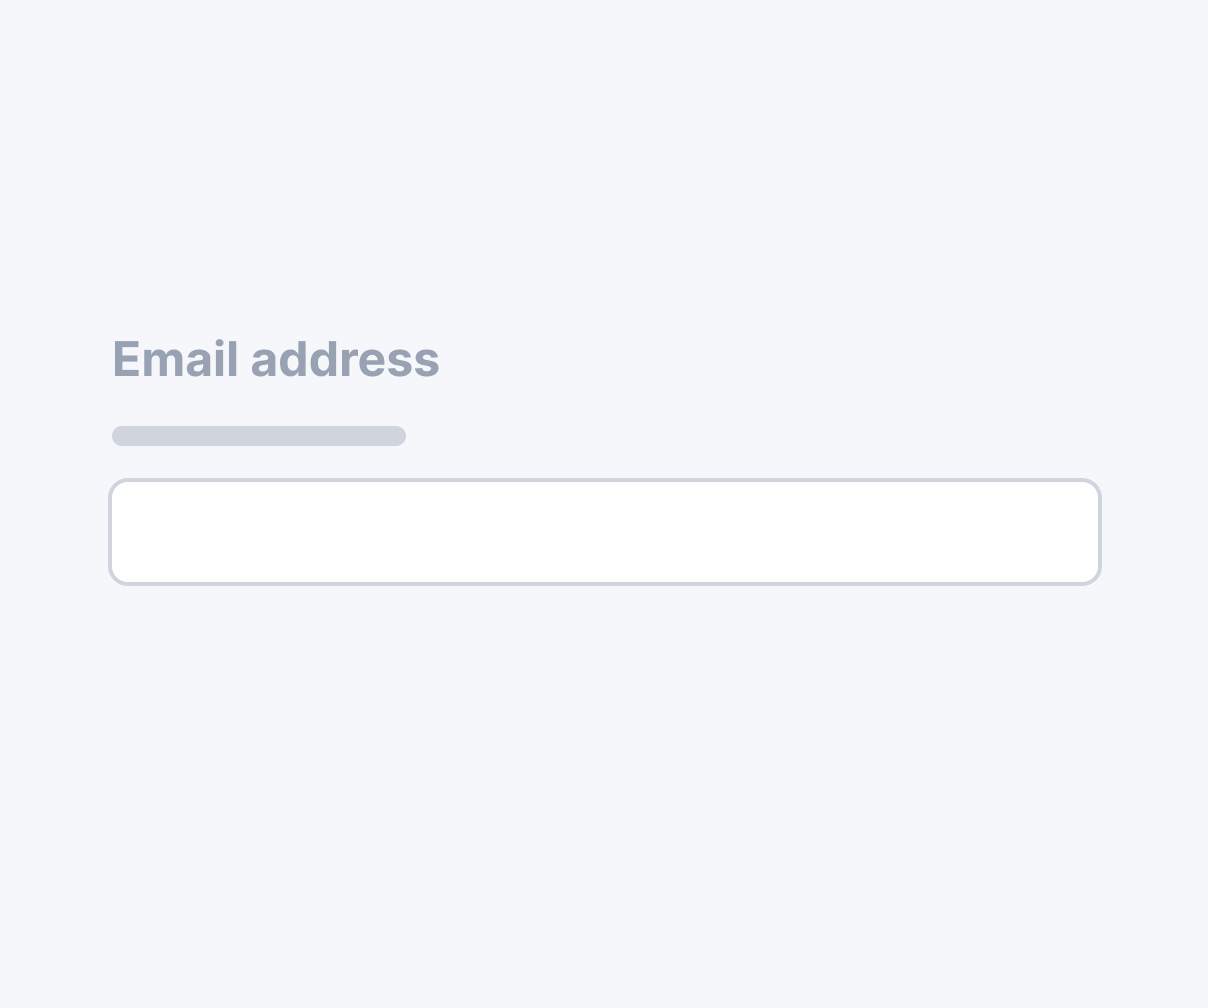 Email Address image